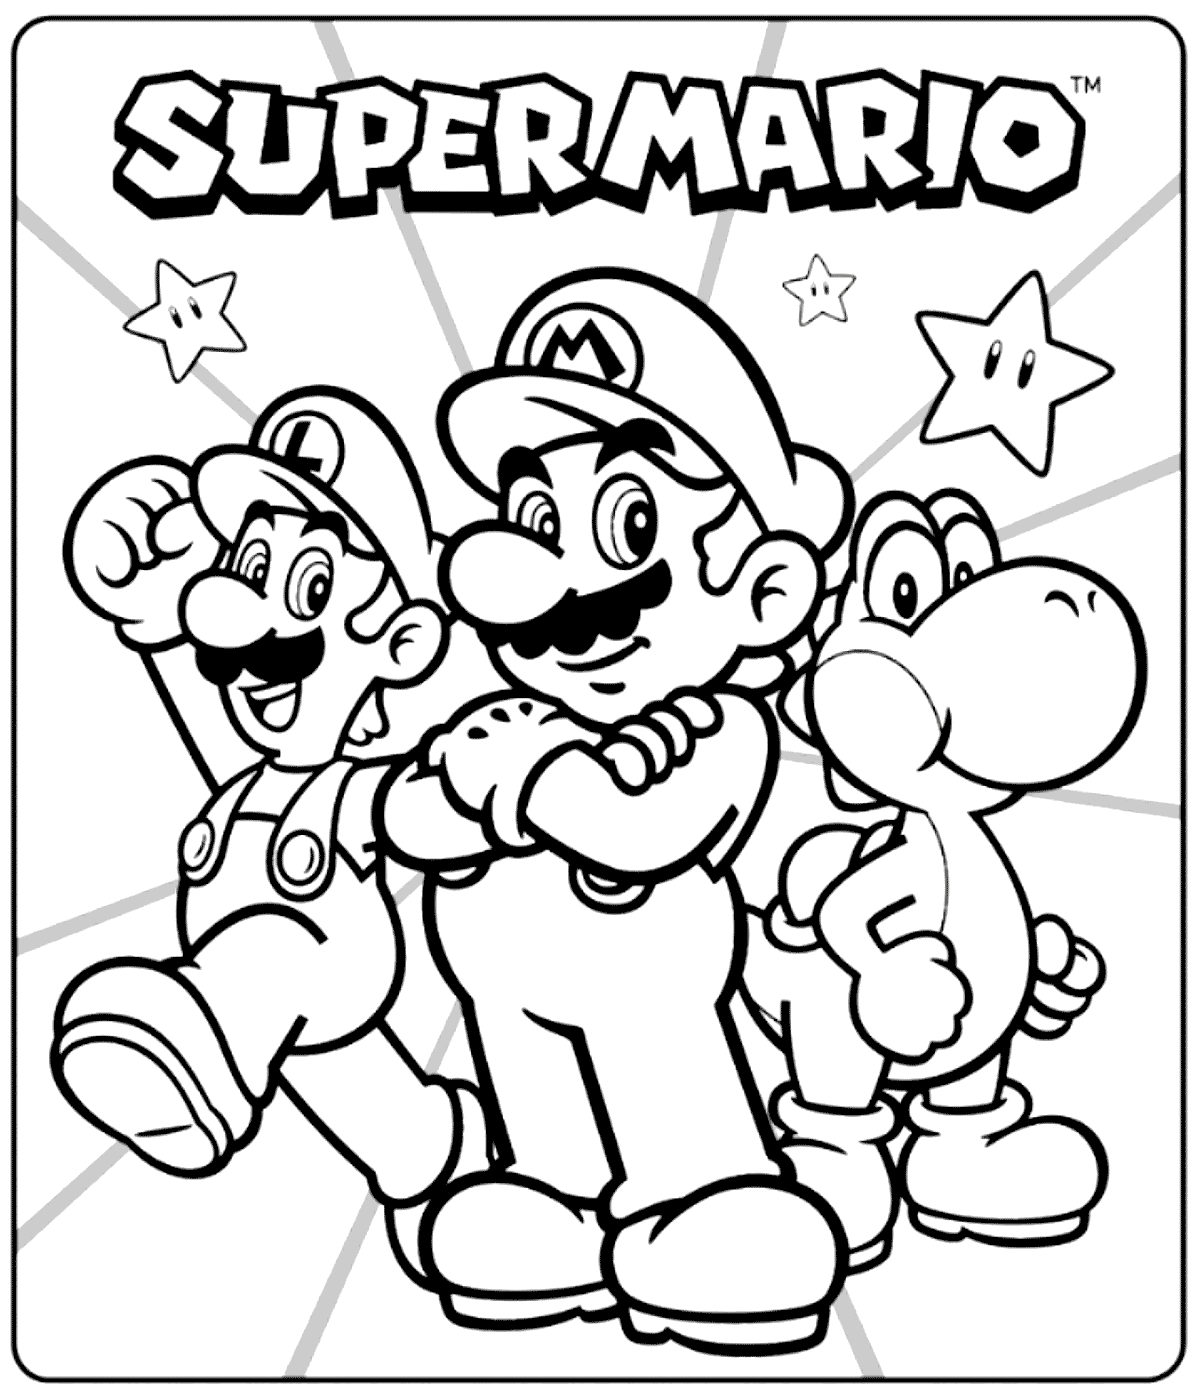 Super Mario Coloring Page - Coloring Home